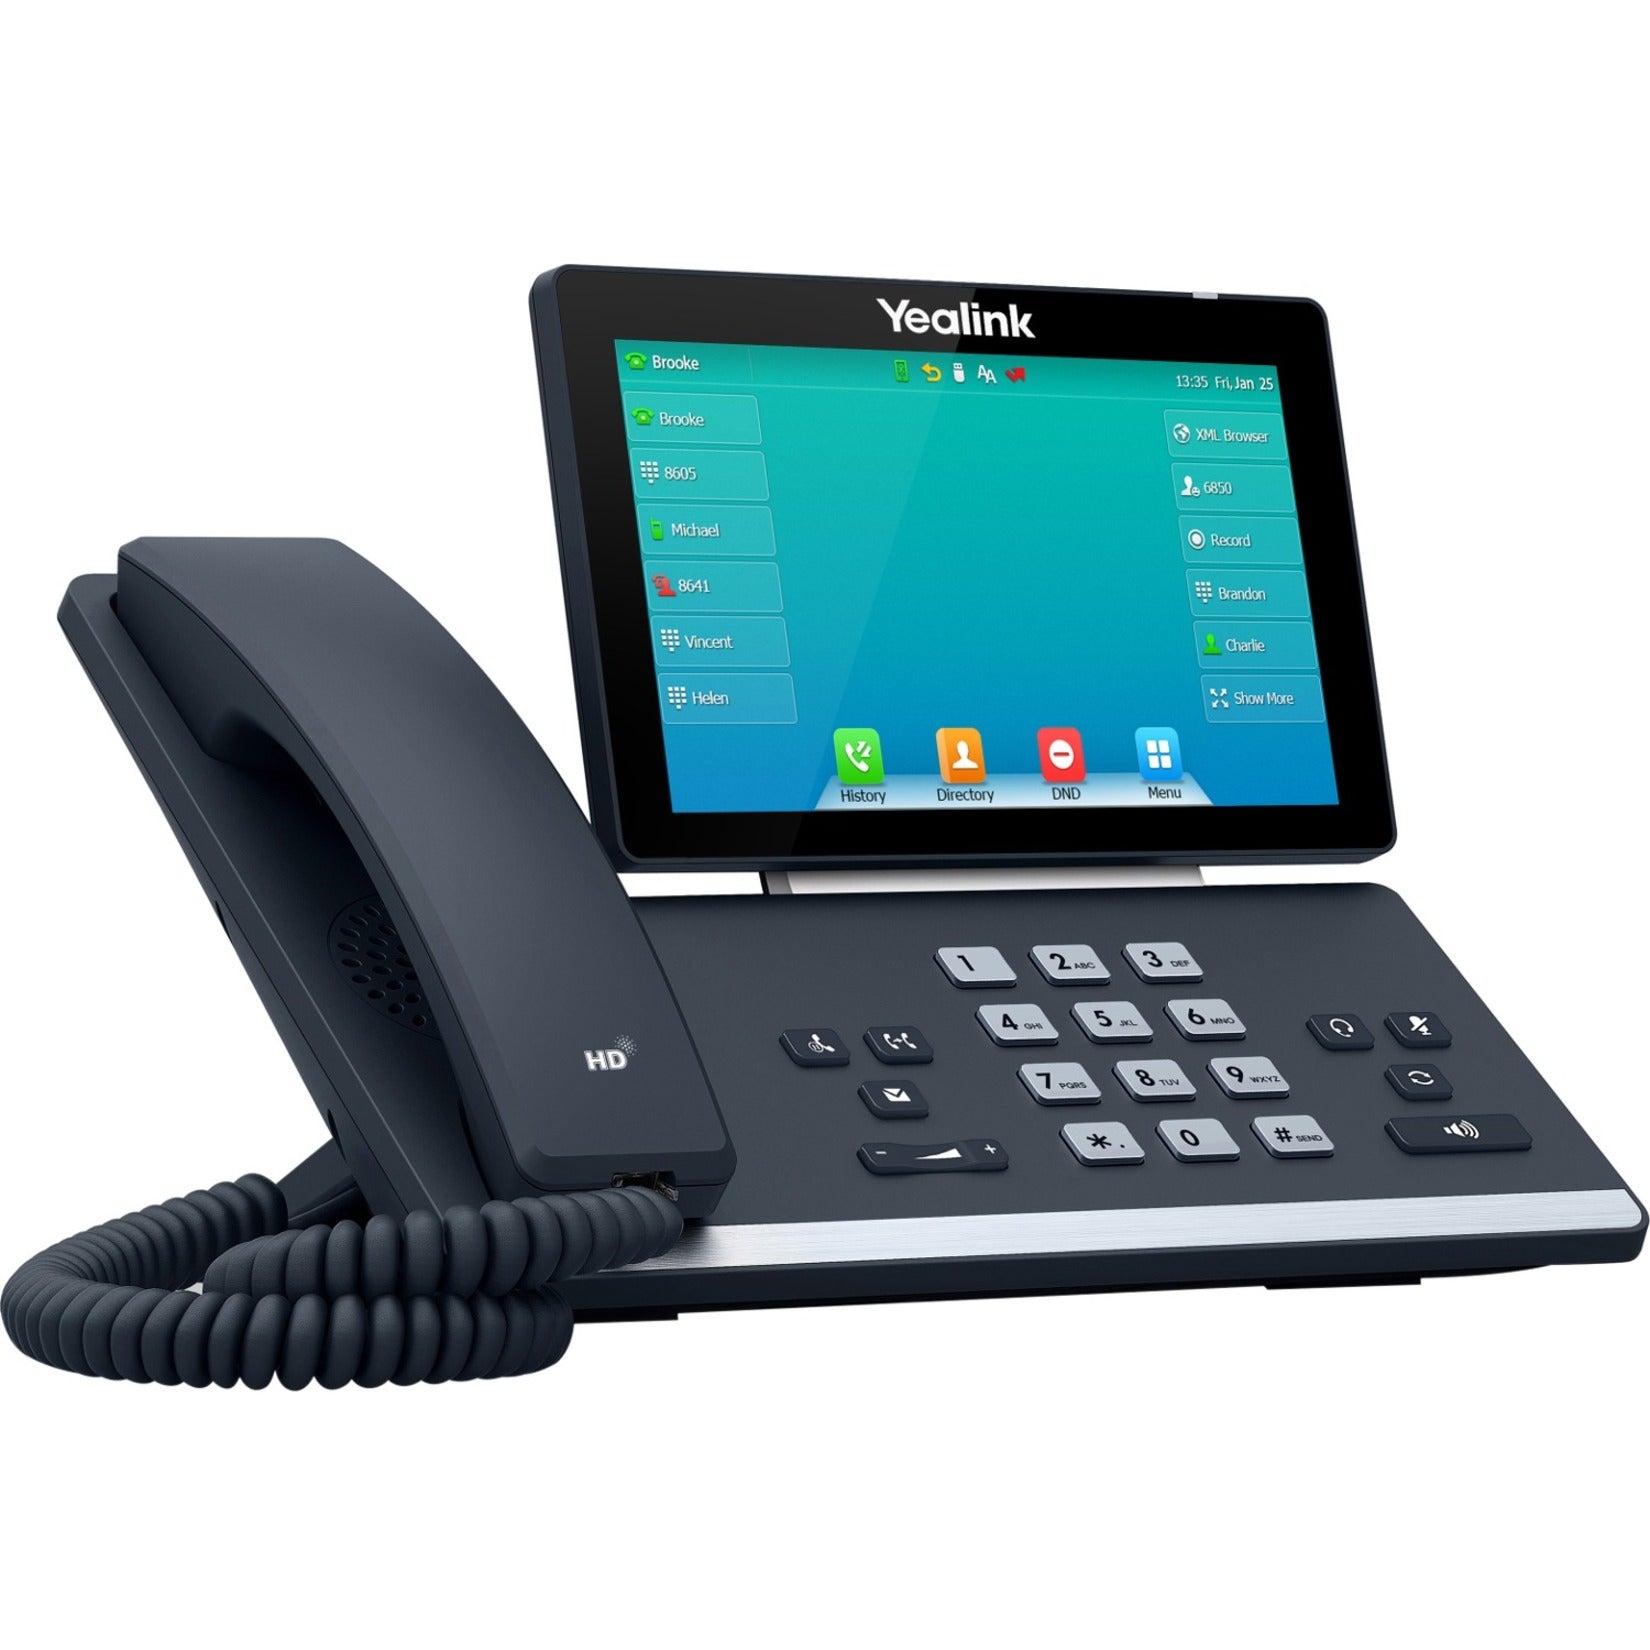 Yealink 1301089 Prime Business Phone to Deliver Optimum Desktop Productivity, Caller ID, Speakerphone, Bluetooth, Wi-Fi